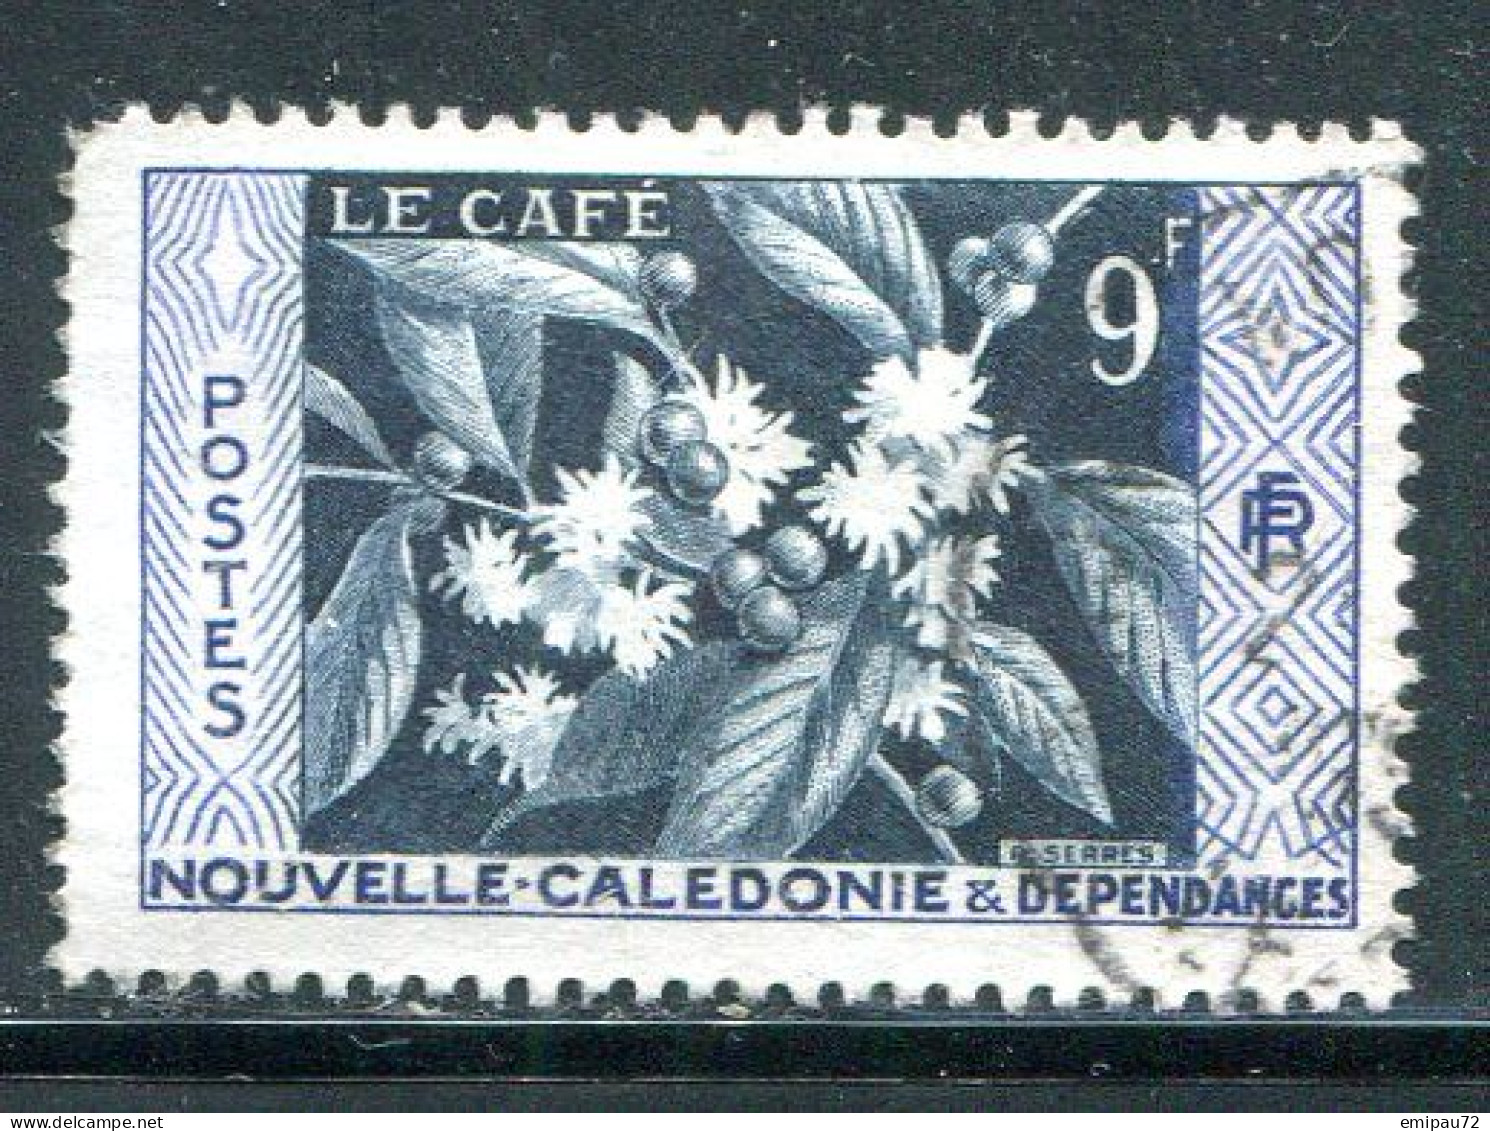 NOUVELLE CALEDONIE- Y&T N°286- Oblitéré - Used Stamps